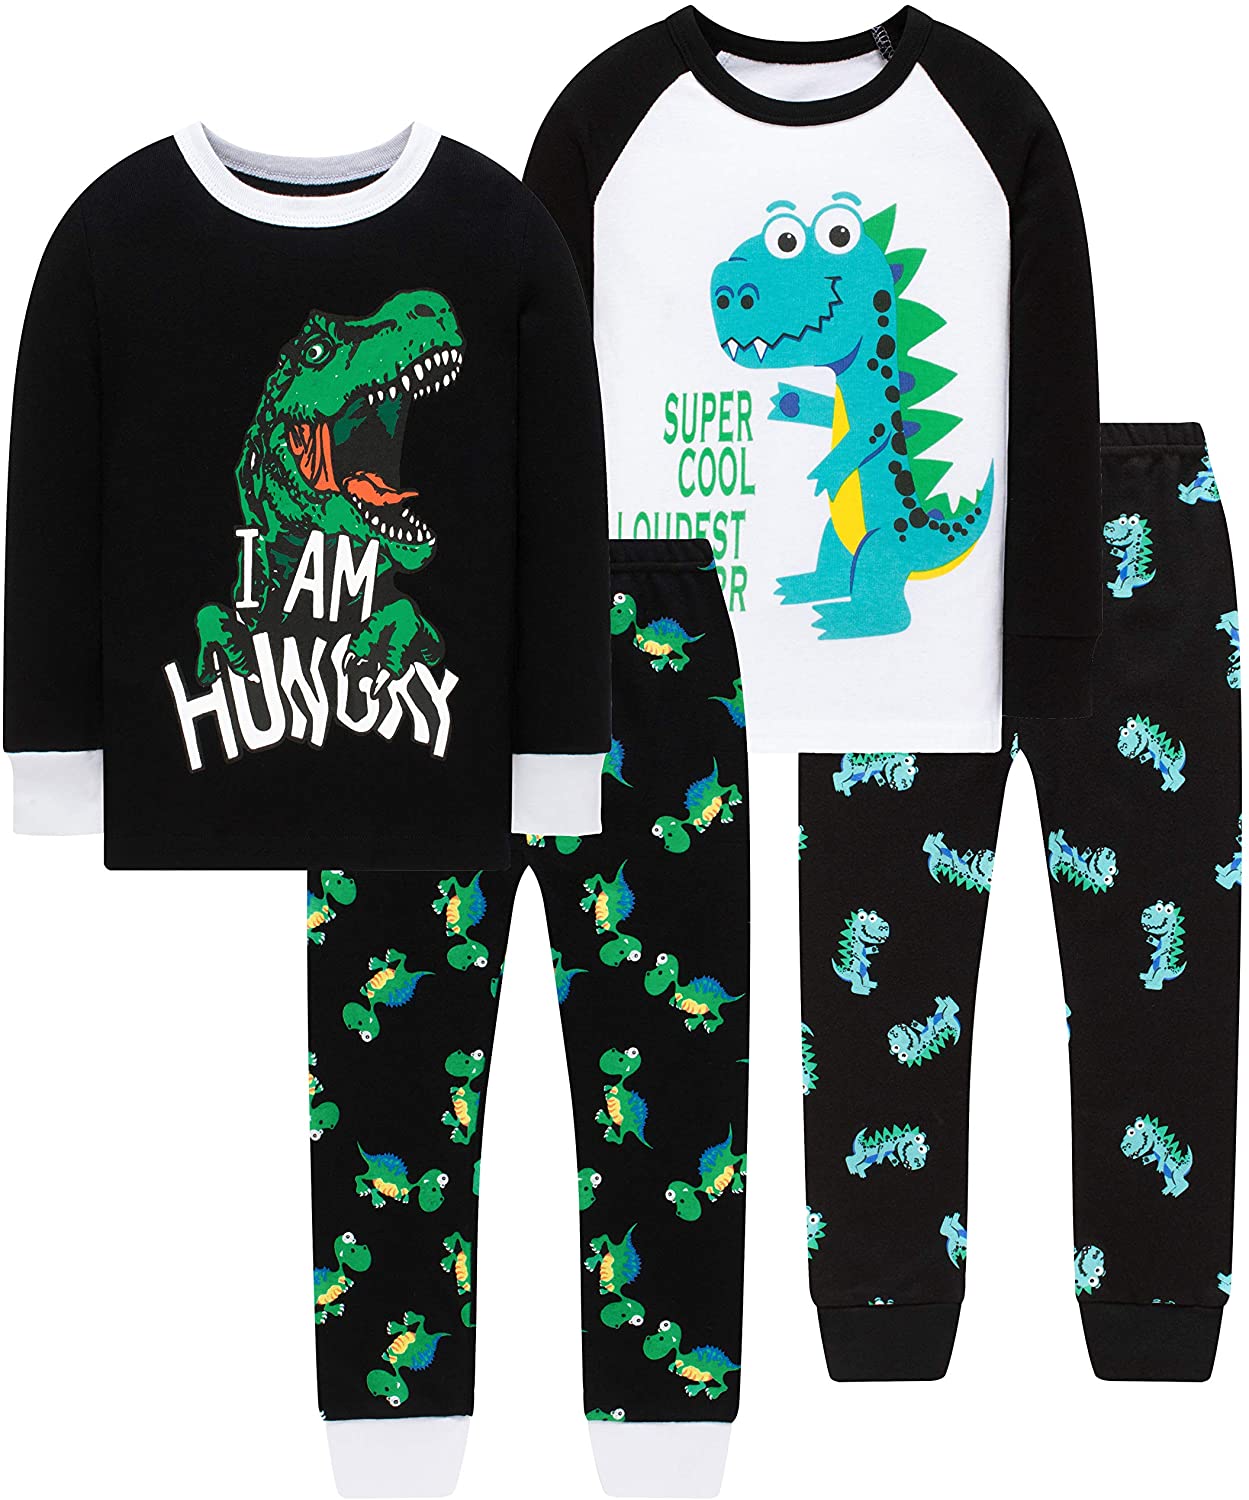 shelry Boys Dinosaurs Pajamas Kids Cotton PJs Children Sleepwear Toddler Clothes 